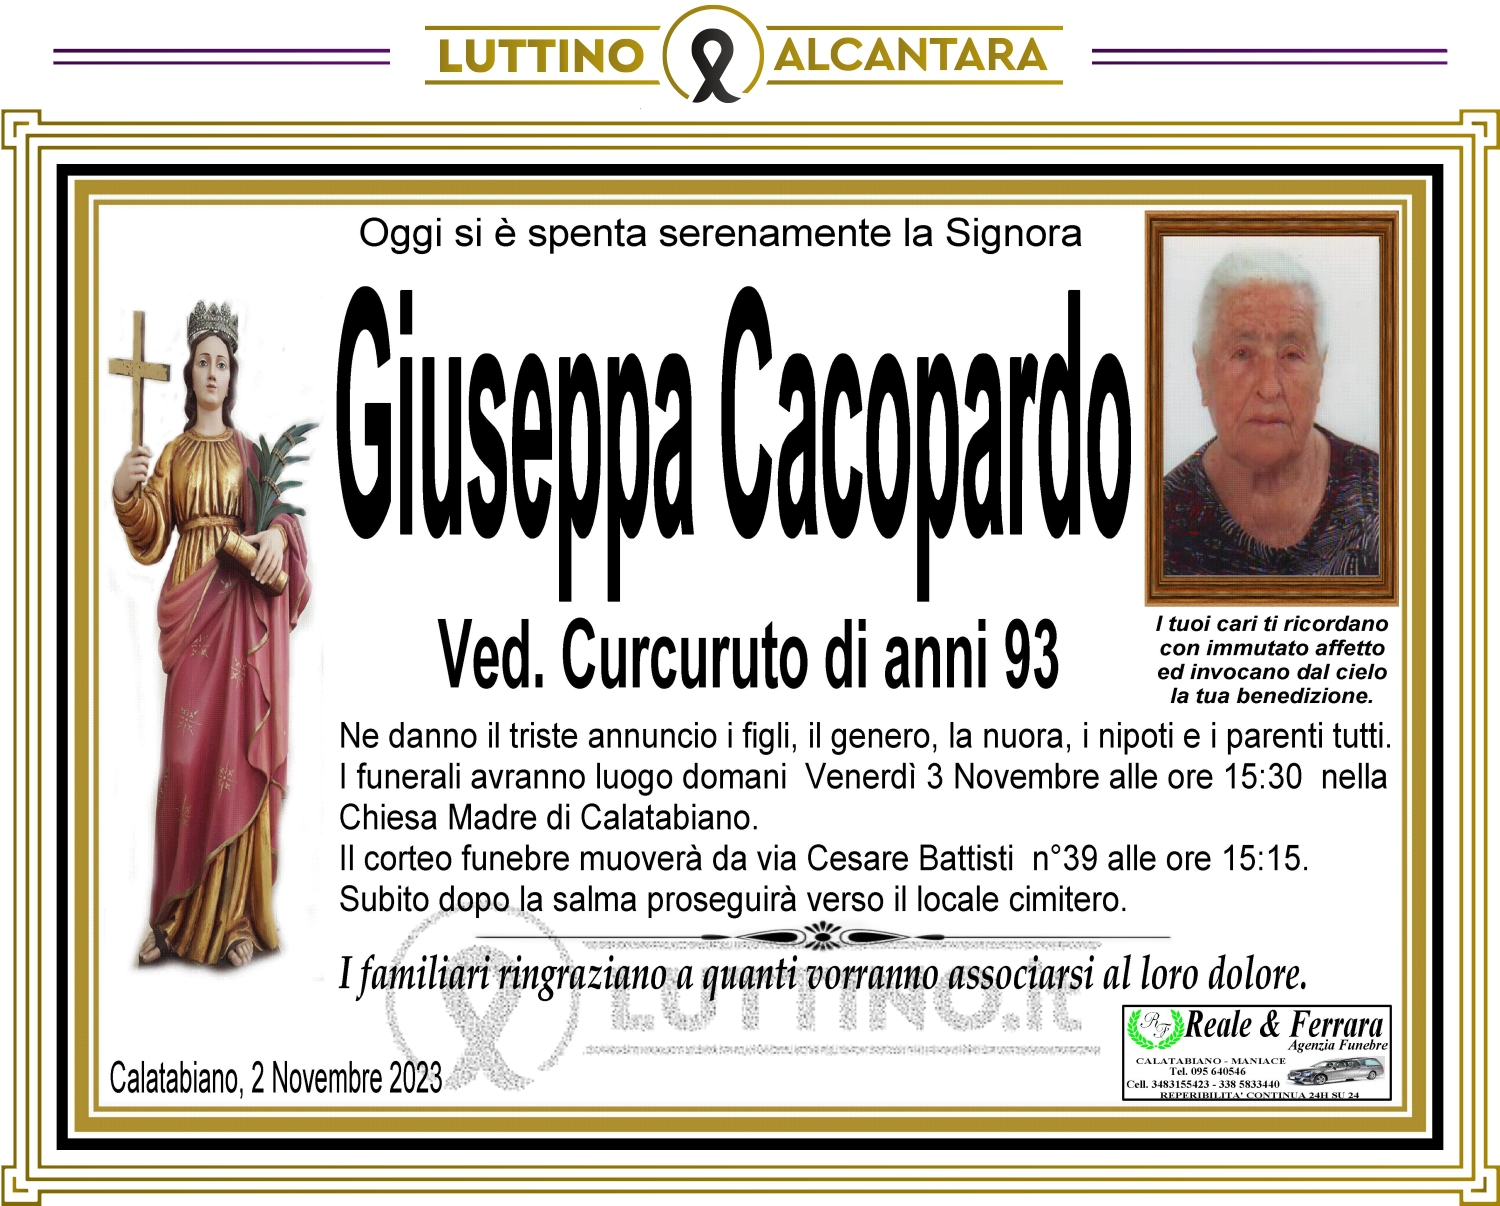 Giuseppa Cacopardo